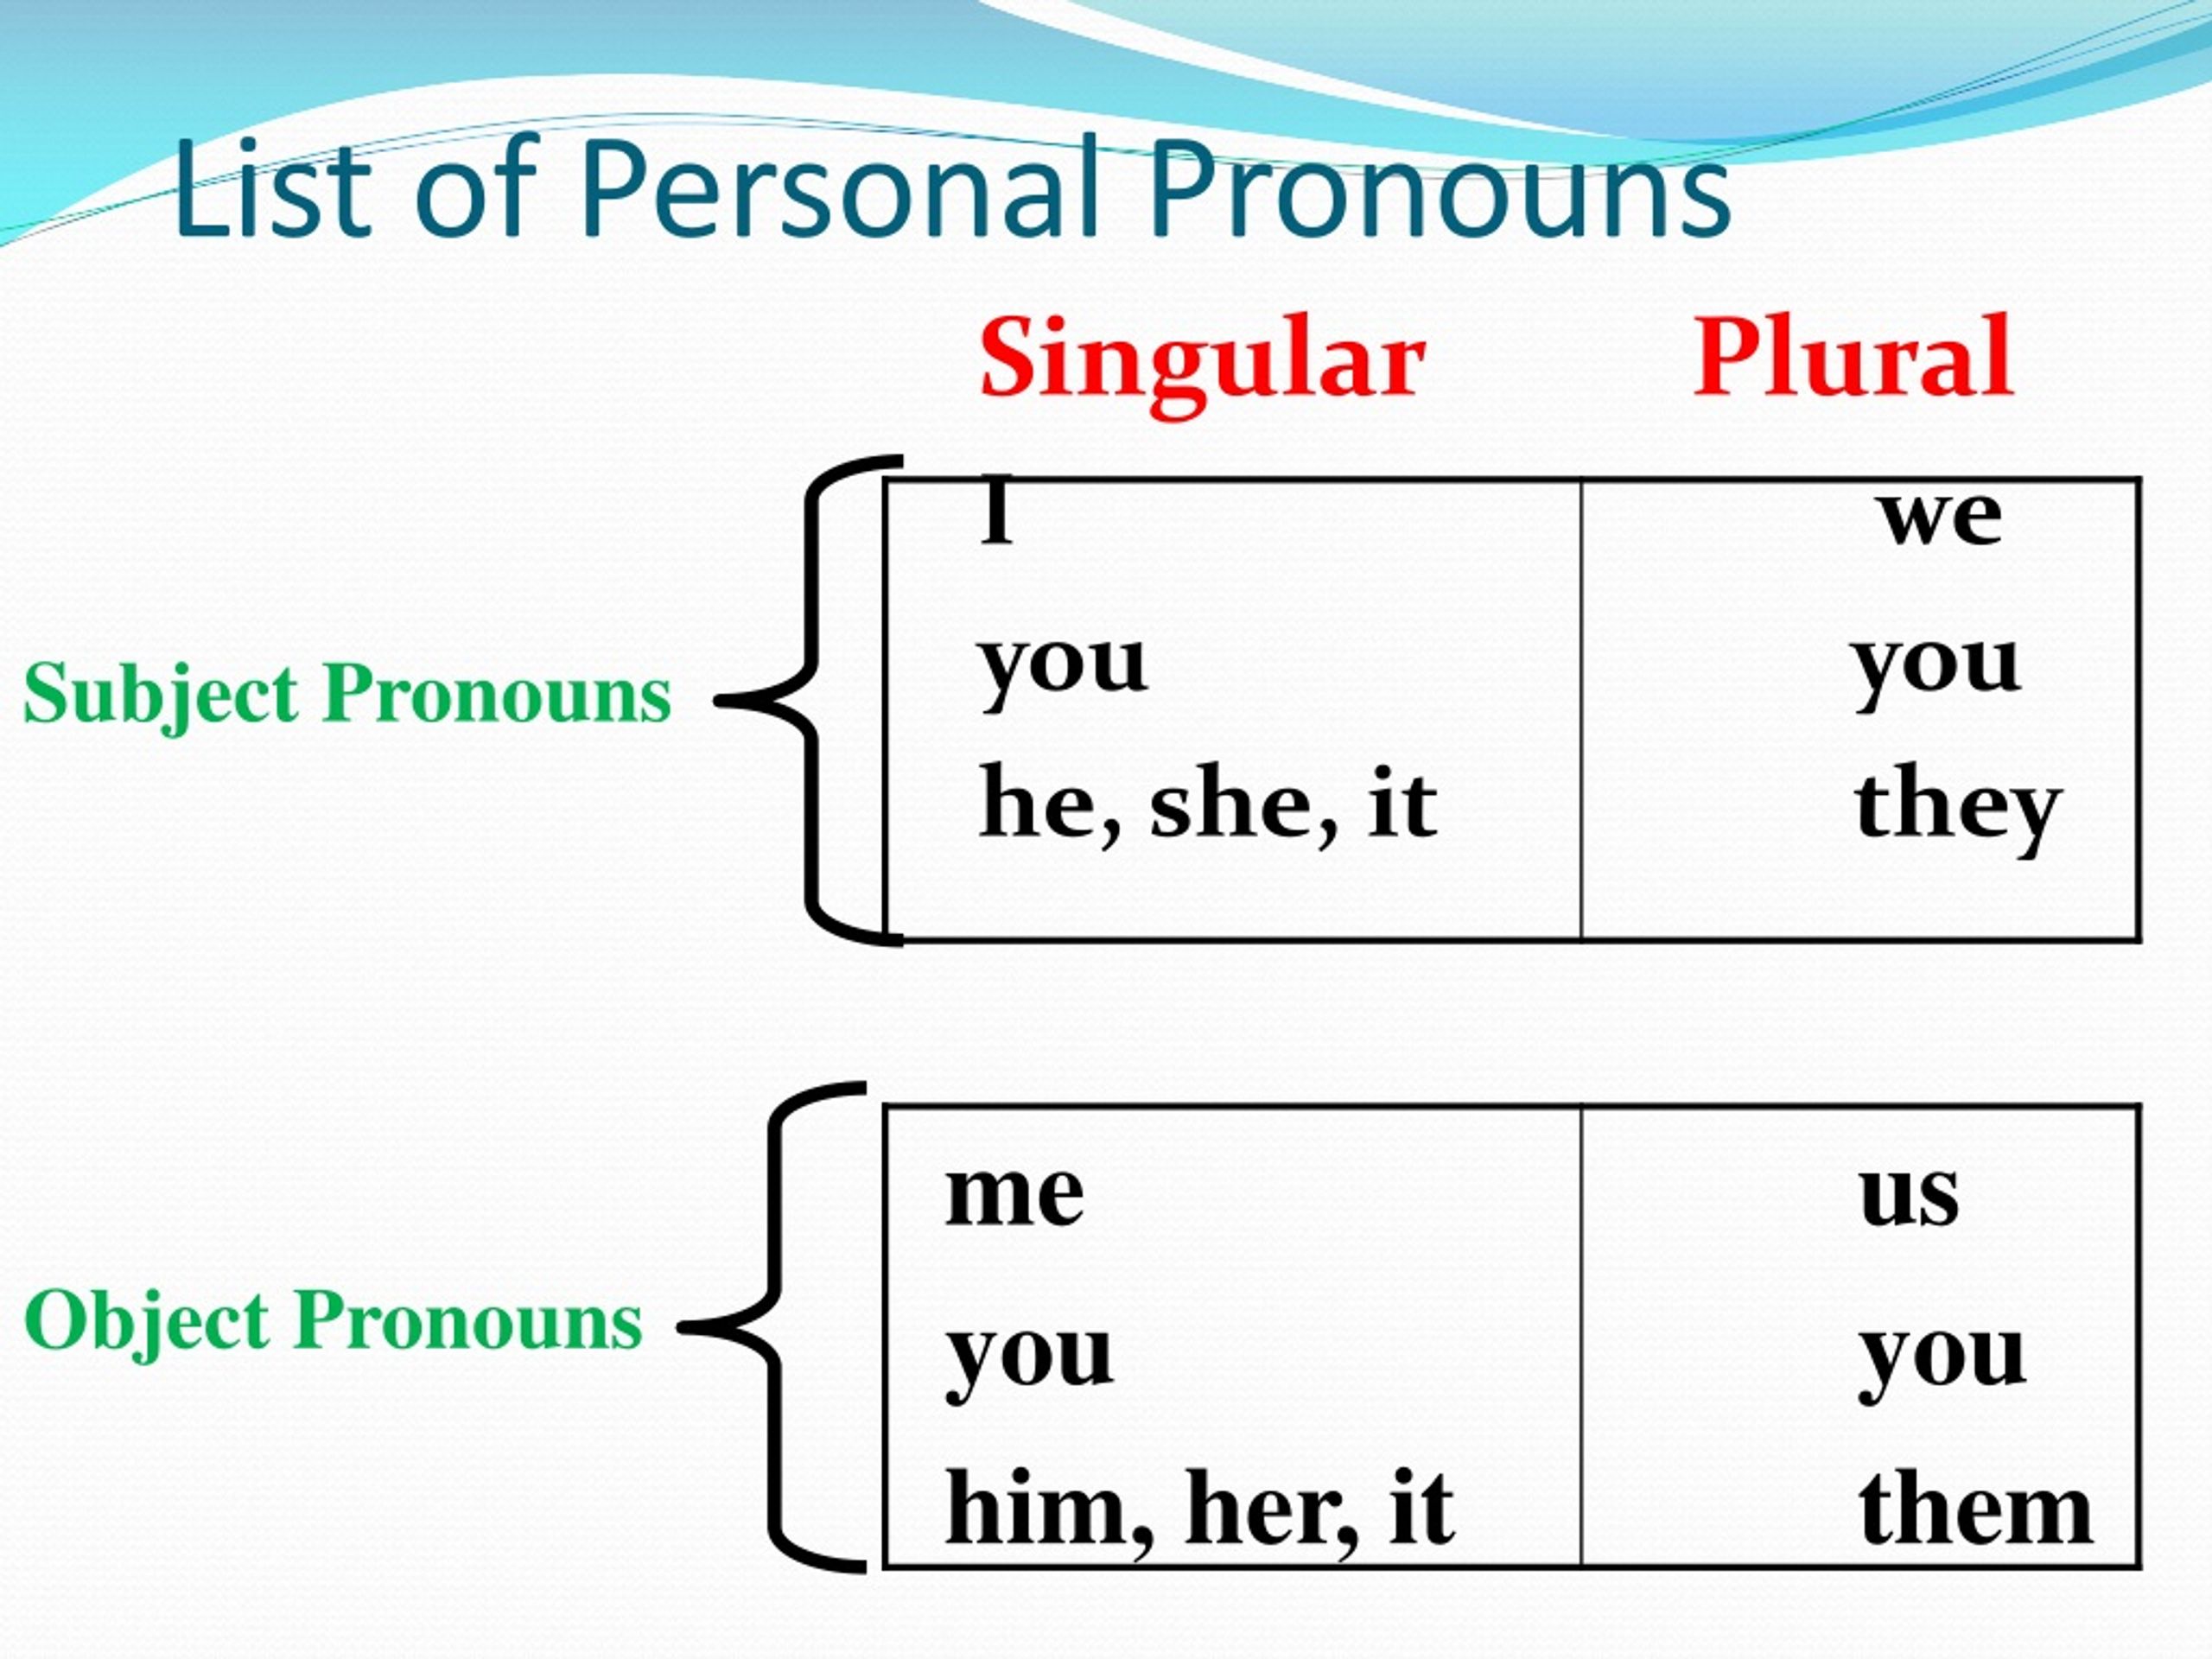 Subject subject an interesting subject. Personal subject pronouns. Personal object pronouns. Сабджект пронаунс. Personal pronouns subject object.